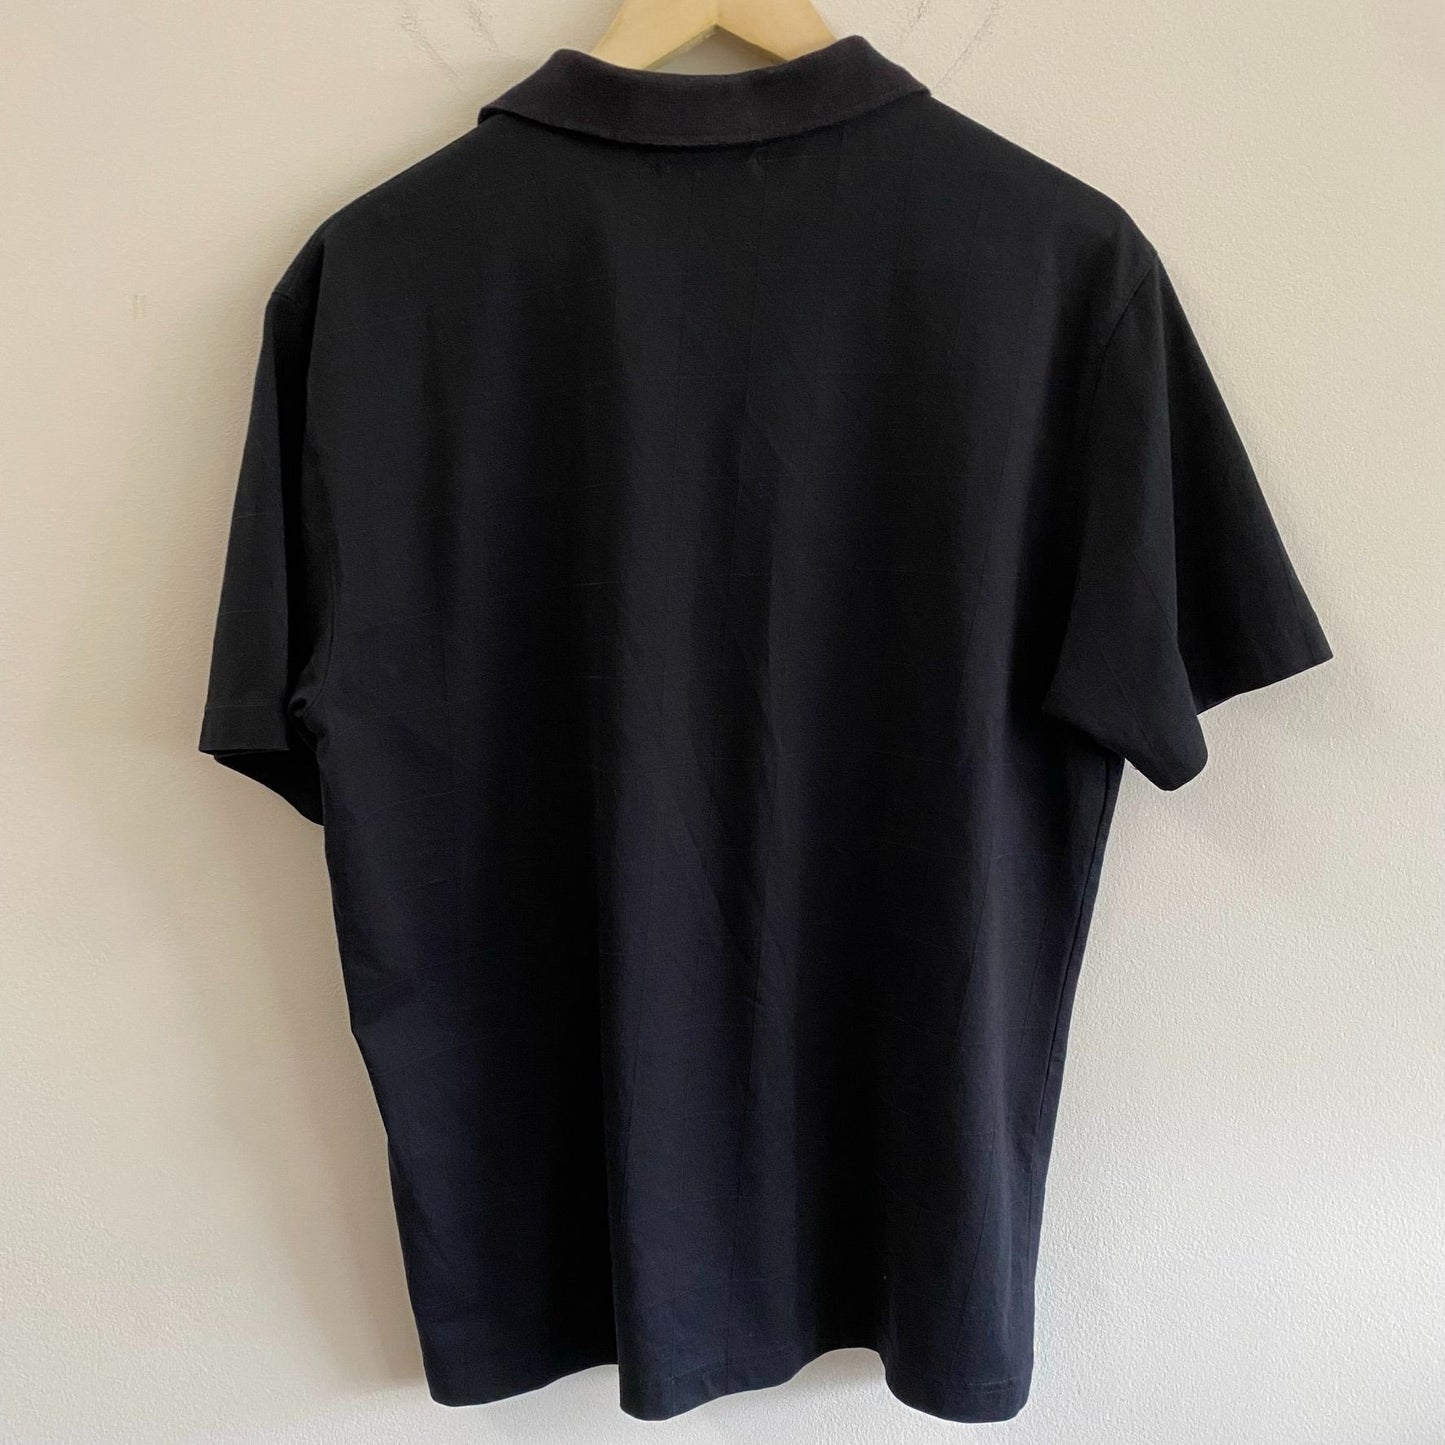 Claiborne Black Windowpane Polo Shirt